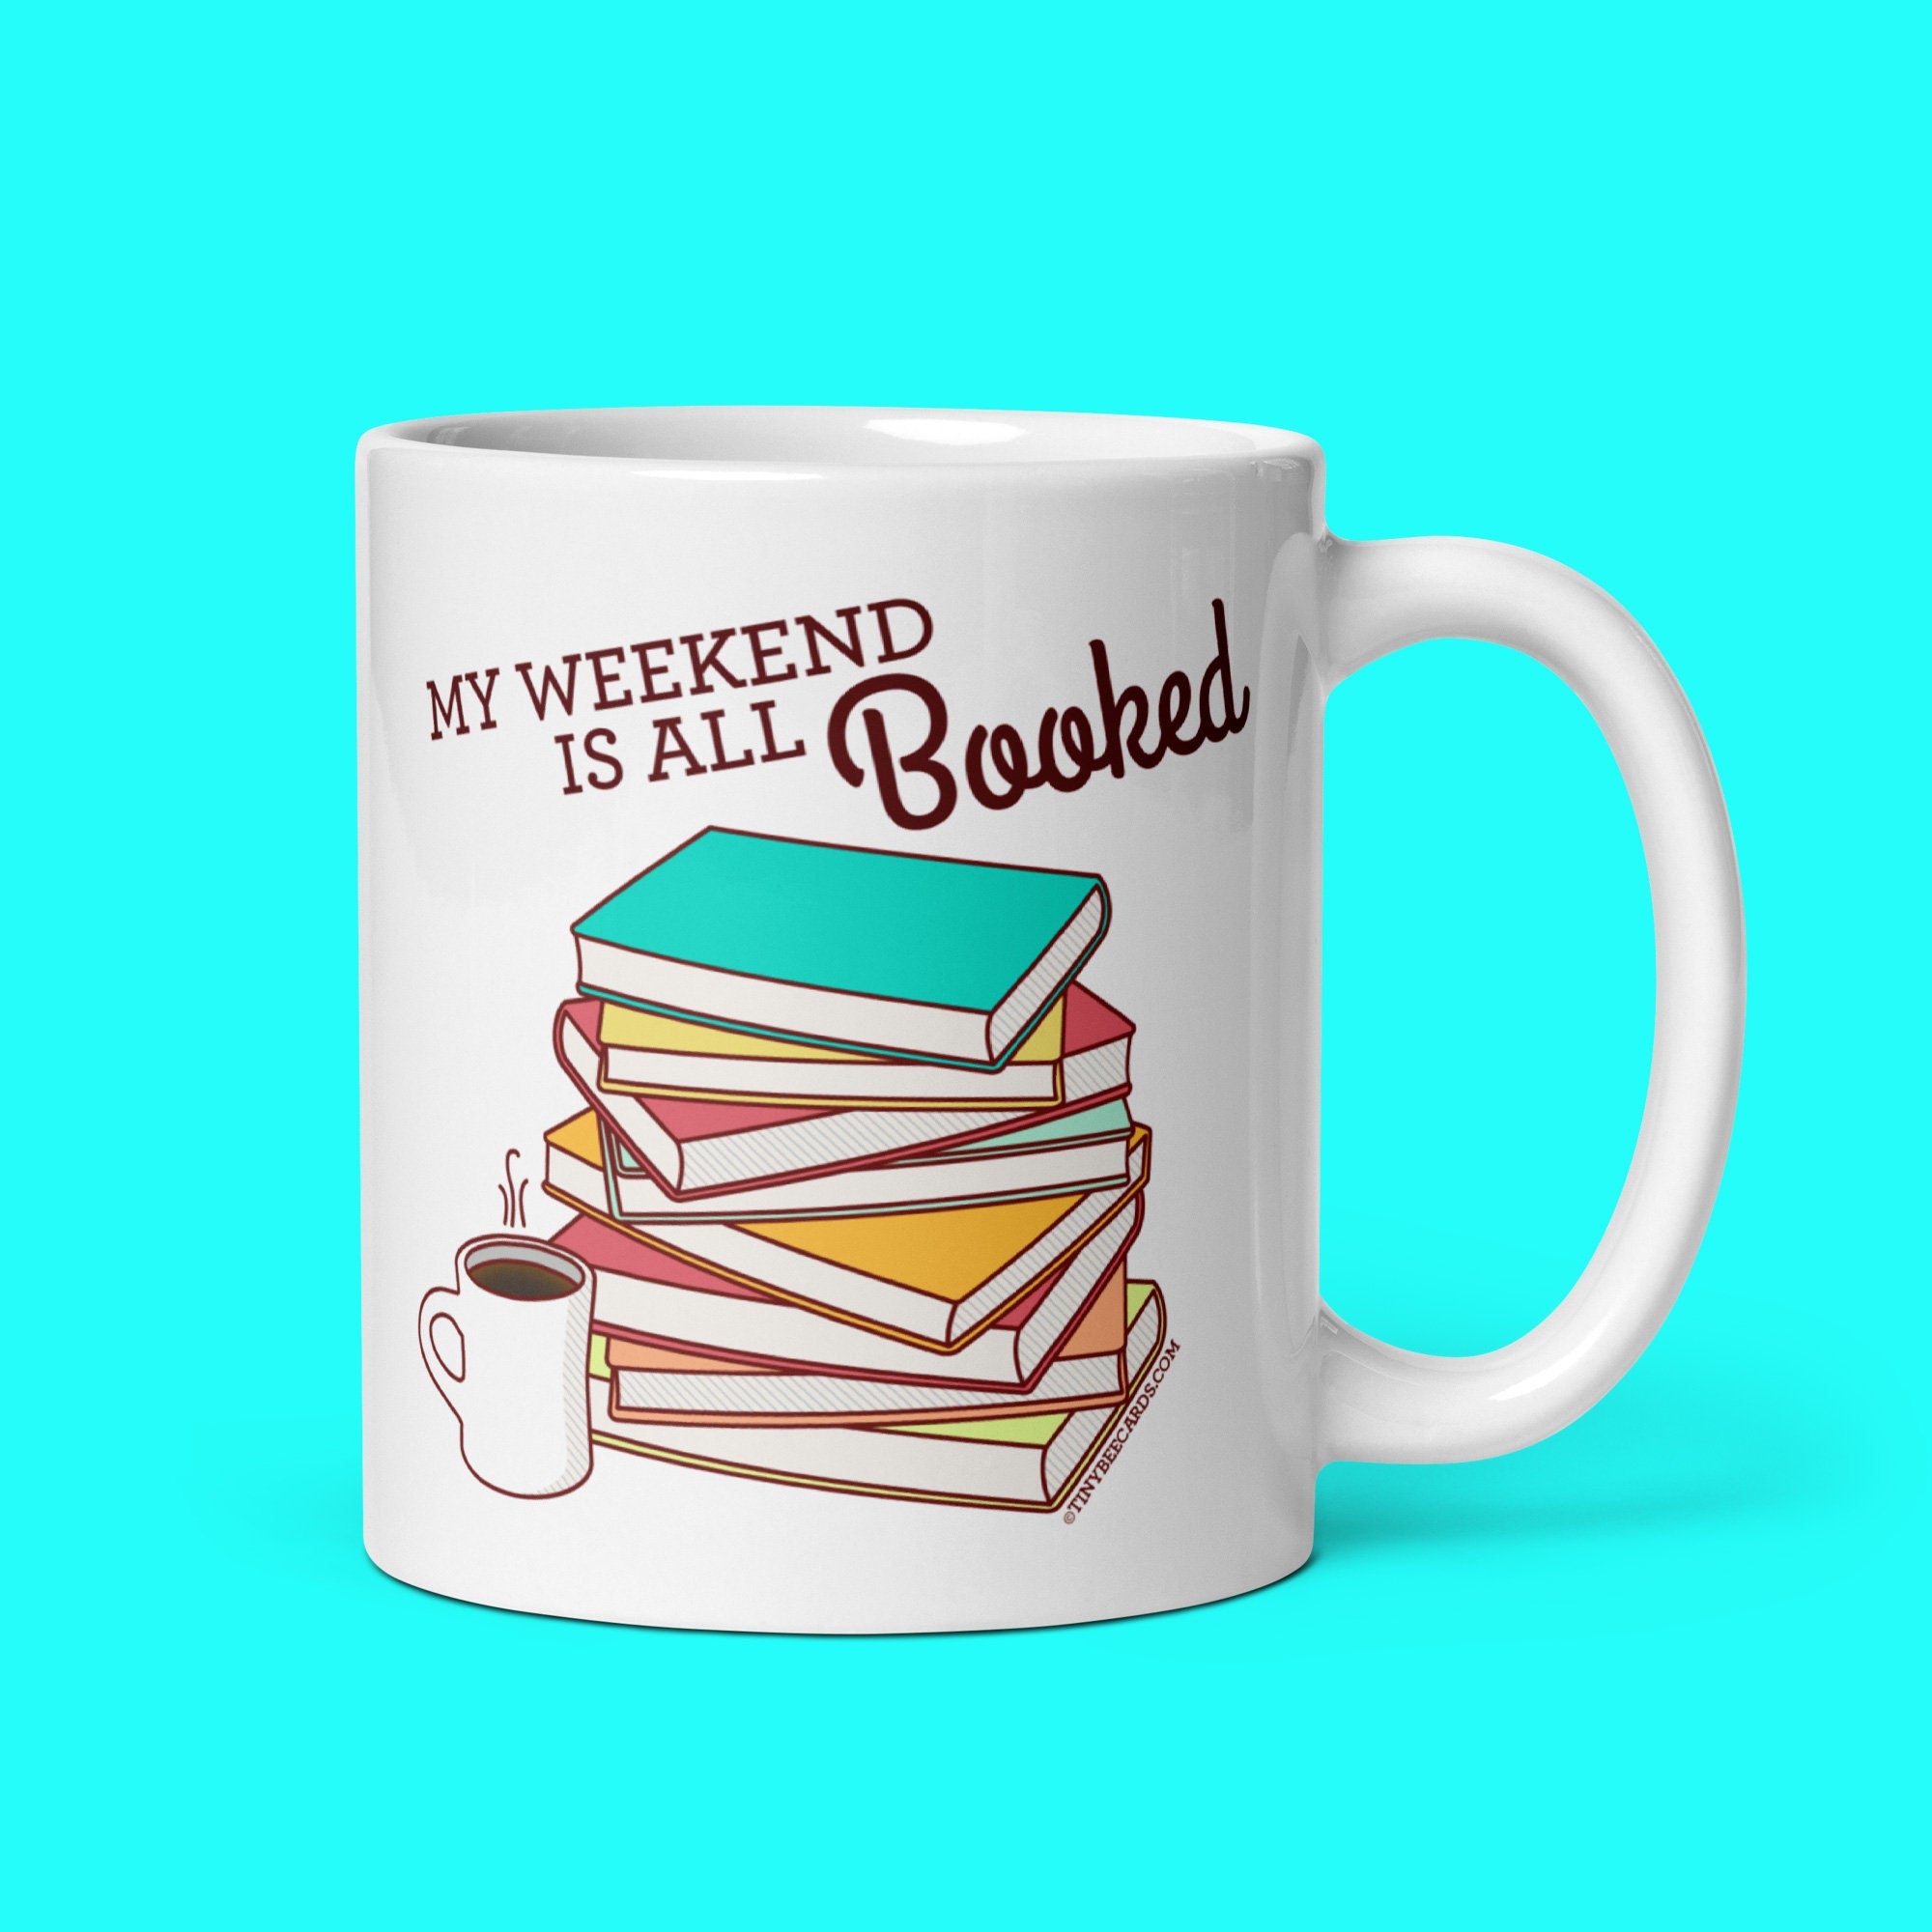 Funny Mug "Weekend is All Booked" - bookworm mug, coffee mug, funny gift, book lover gift, gift for readers, book puns, geeky nerdy mug